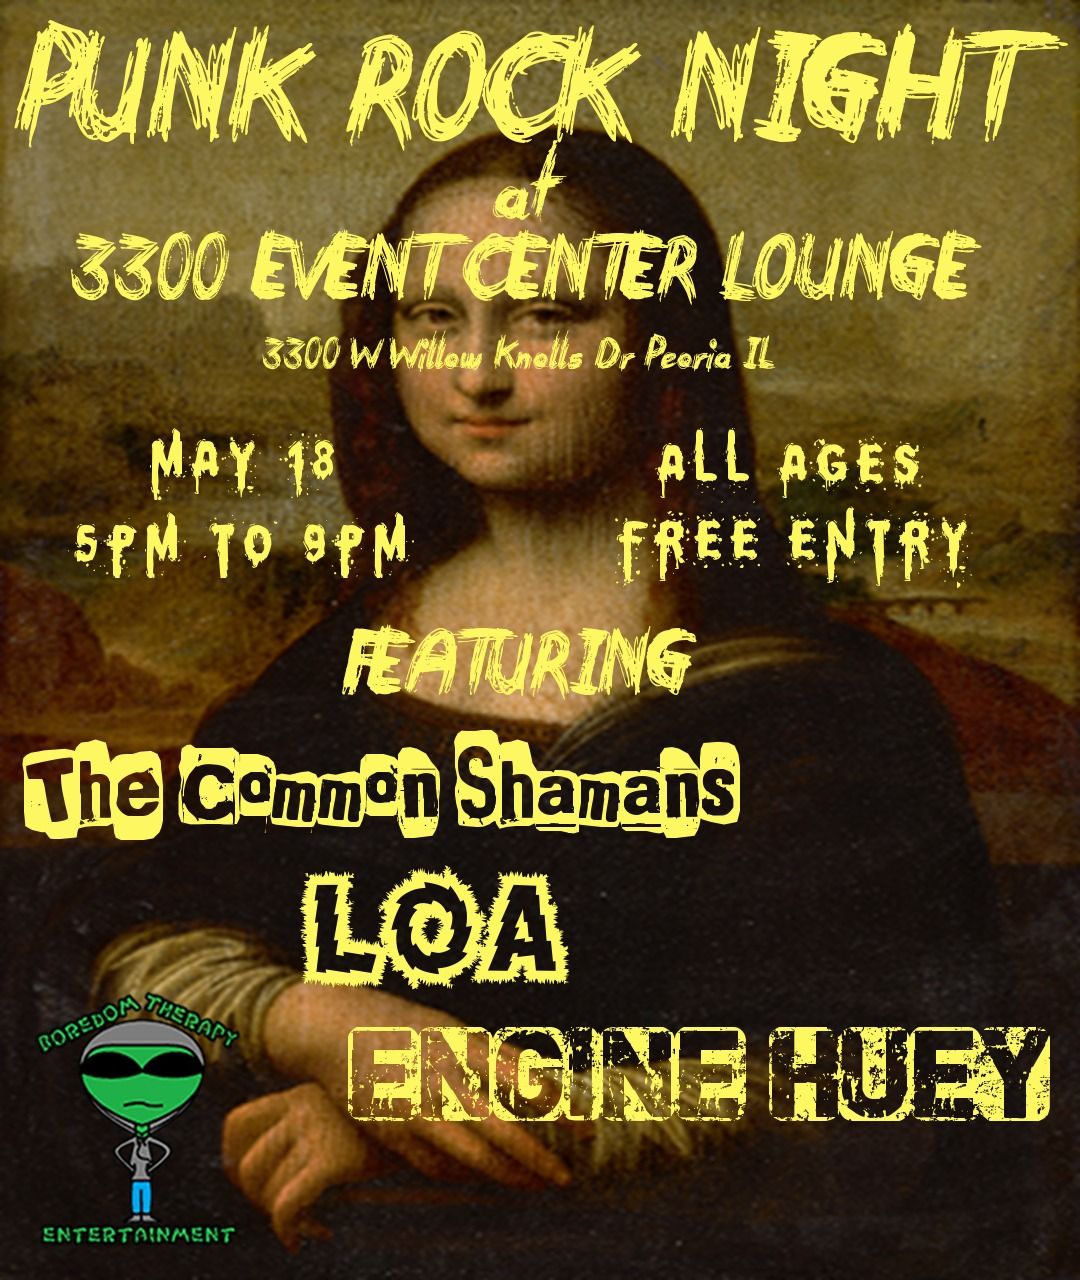 Punk Rock Night at 3300 Event Center